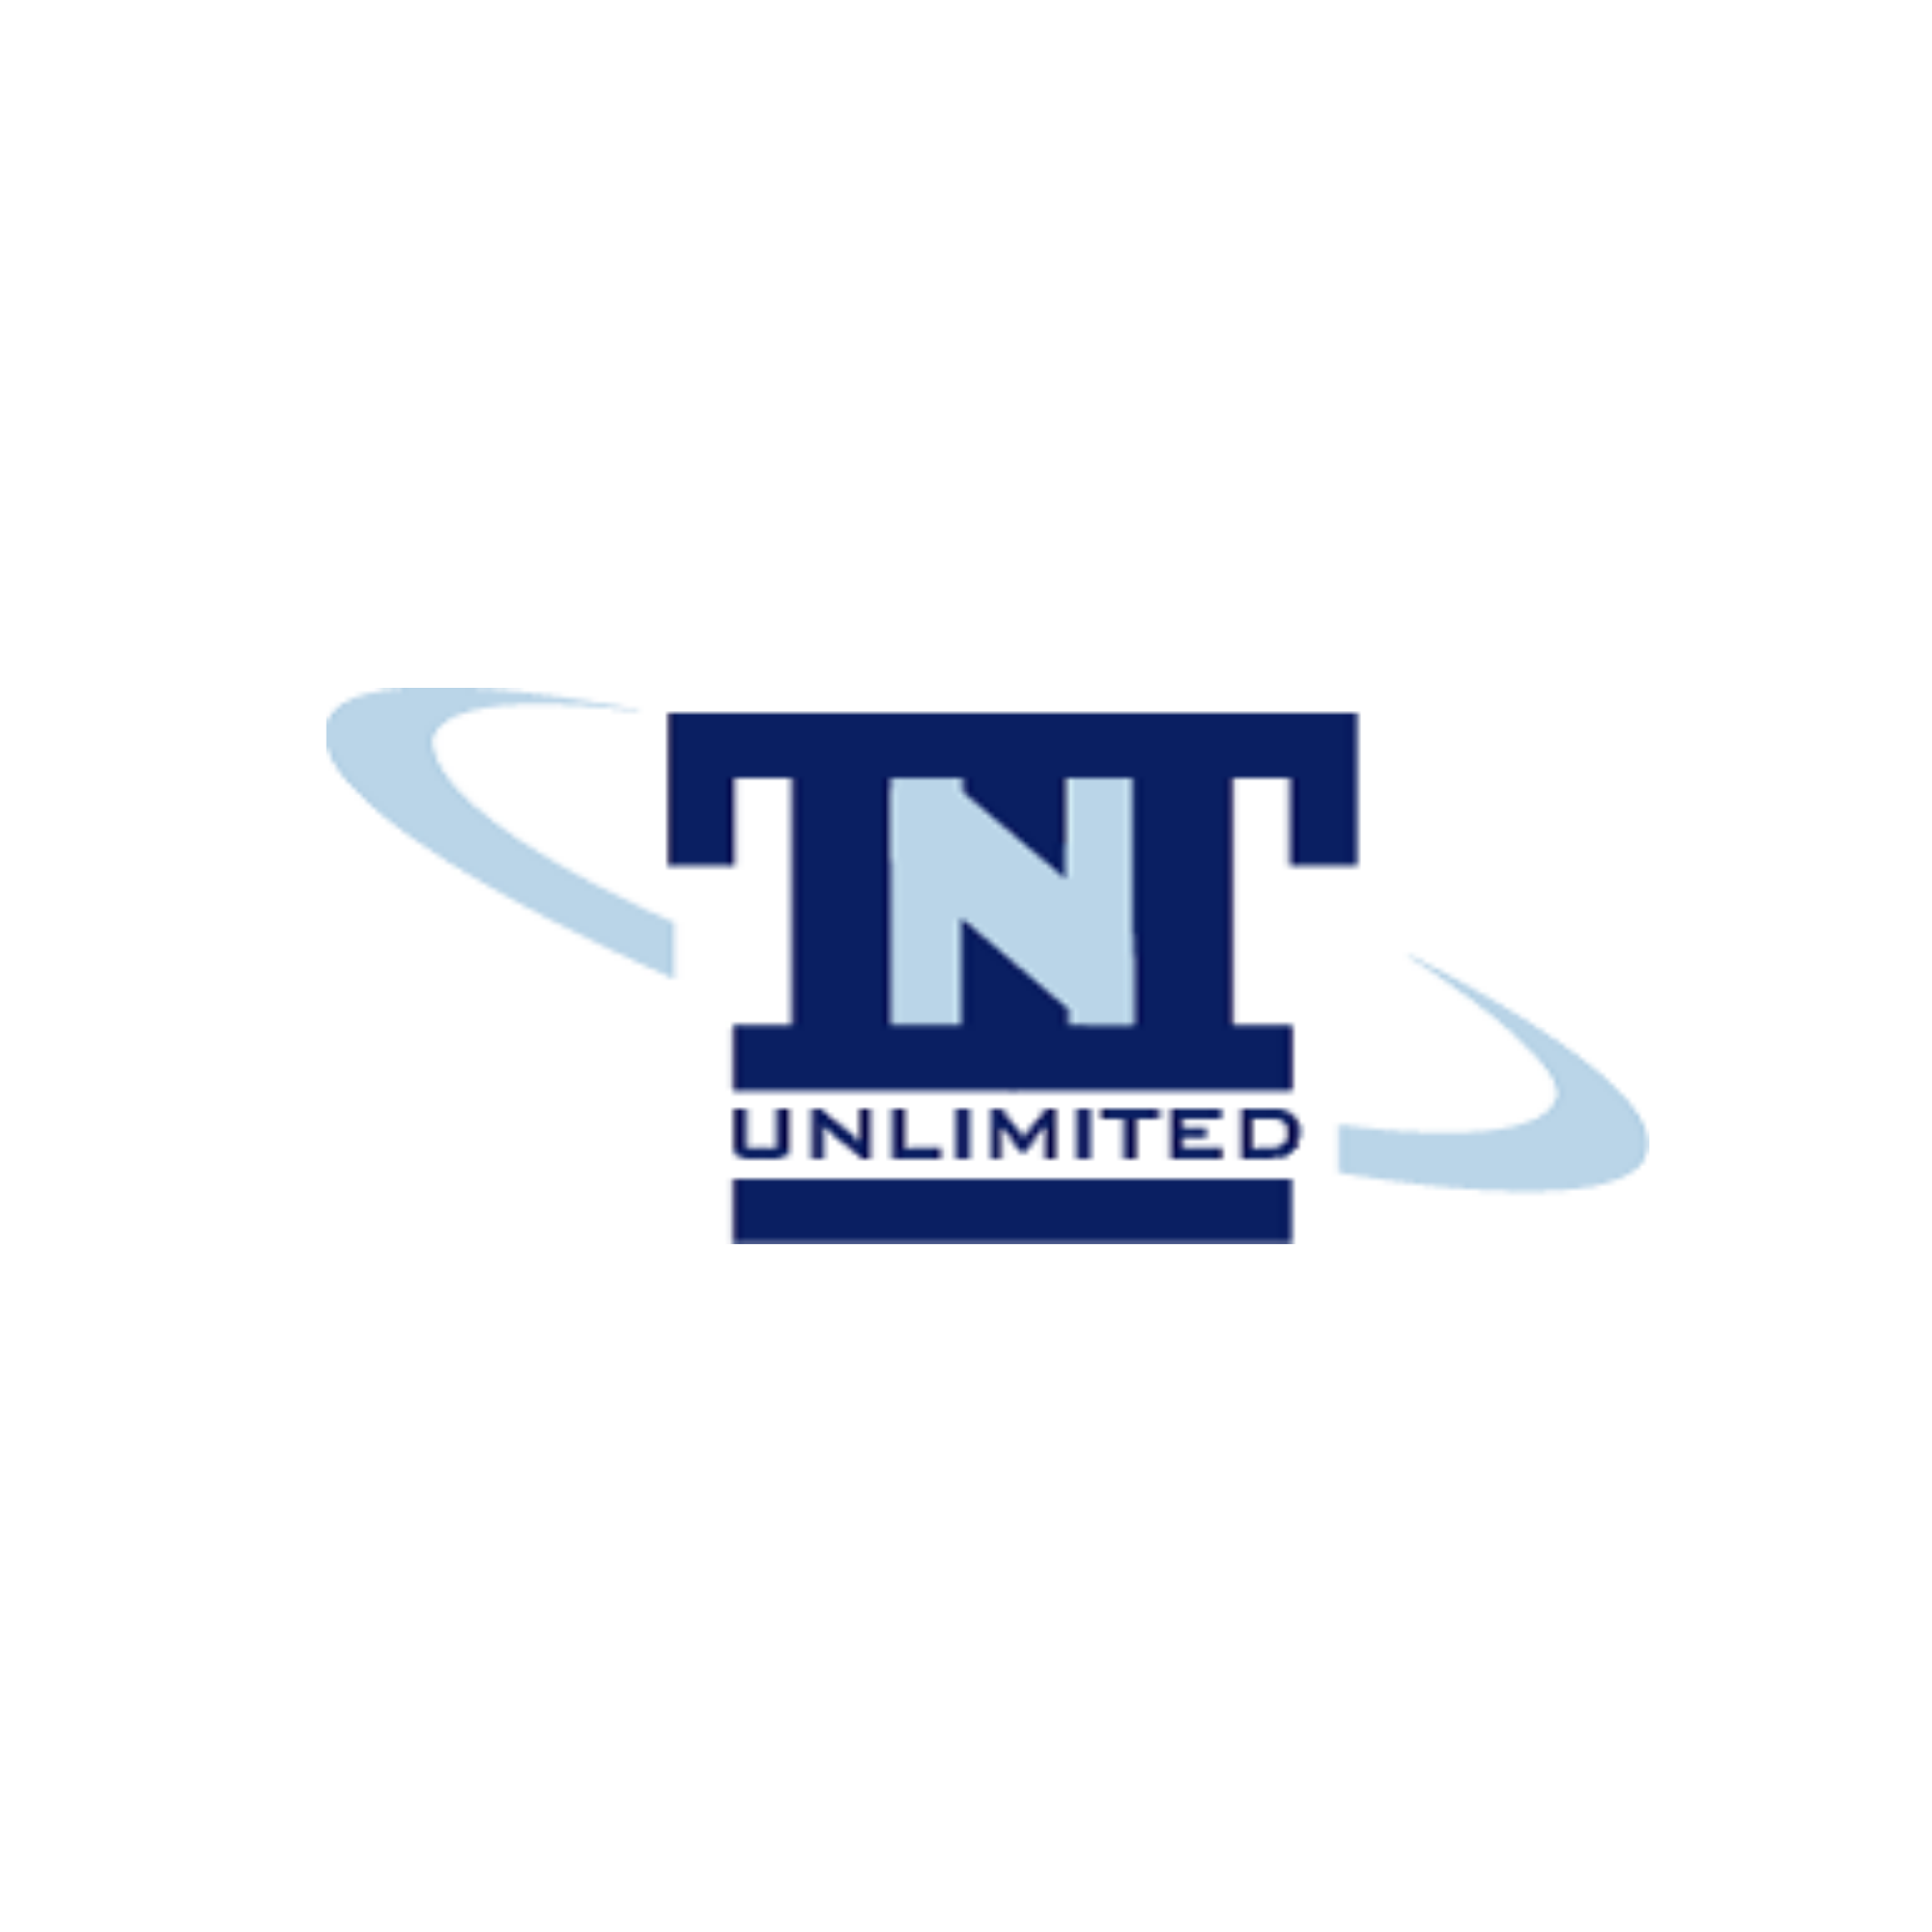 TNT Unlimited